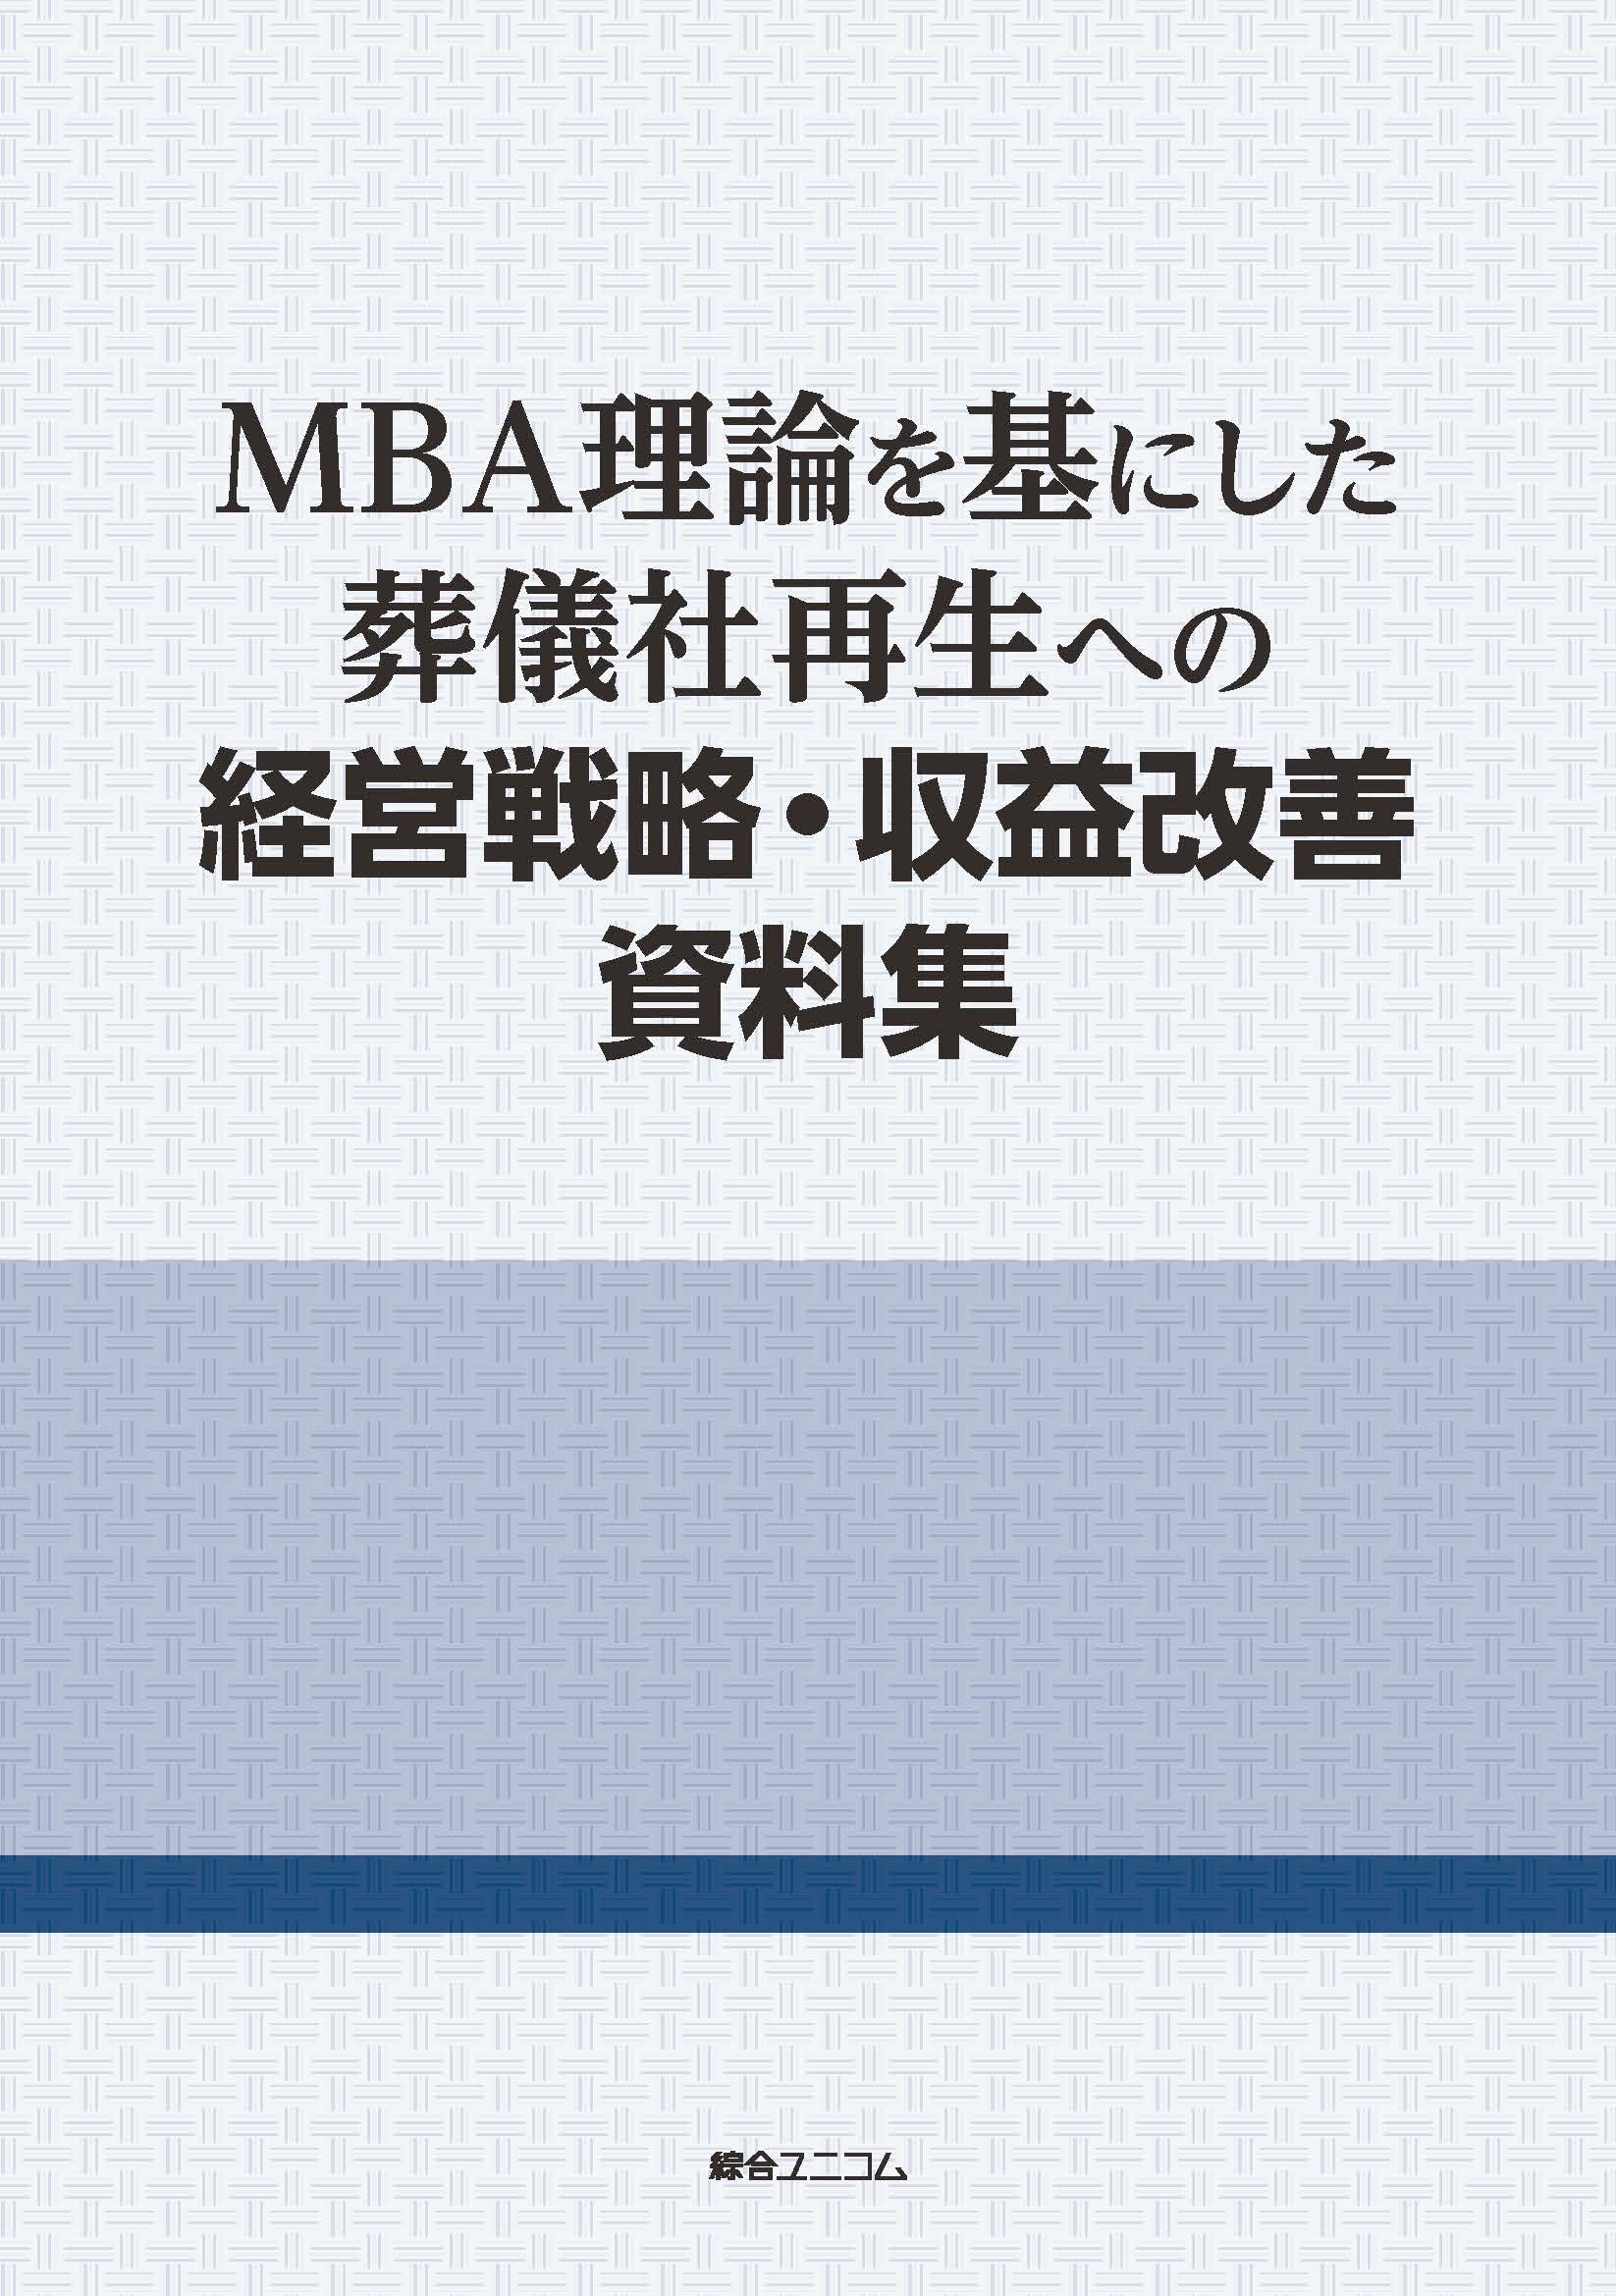 MBA理論を基にした葬儀社再生への経営戦略・収益改善資料集